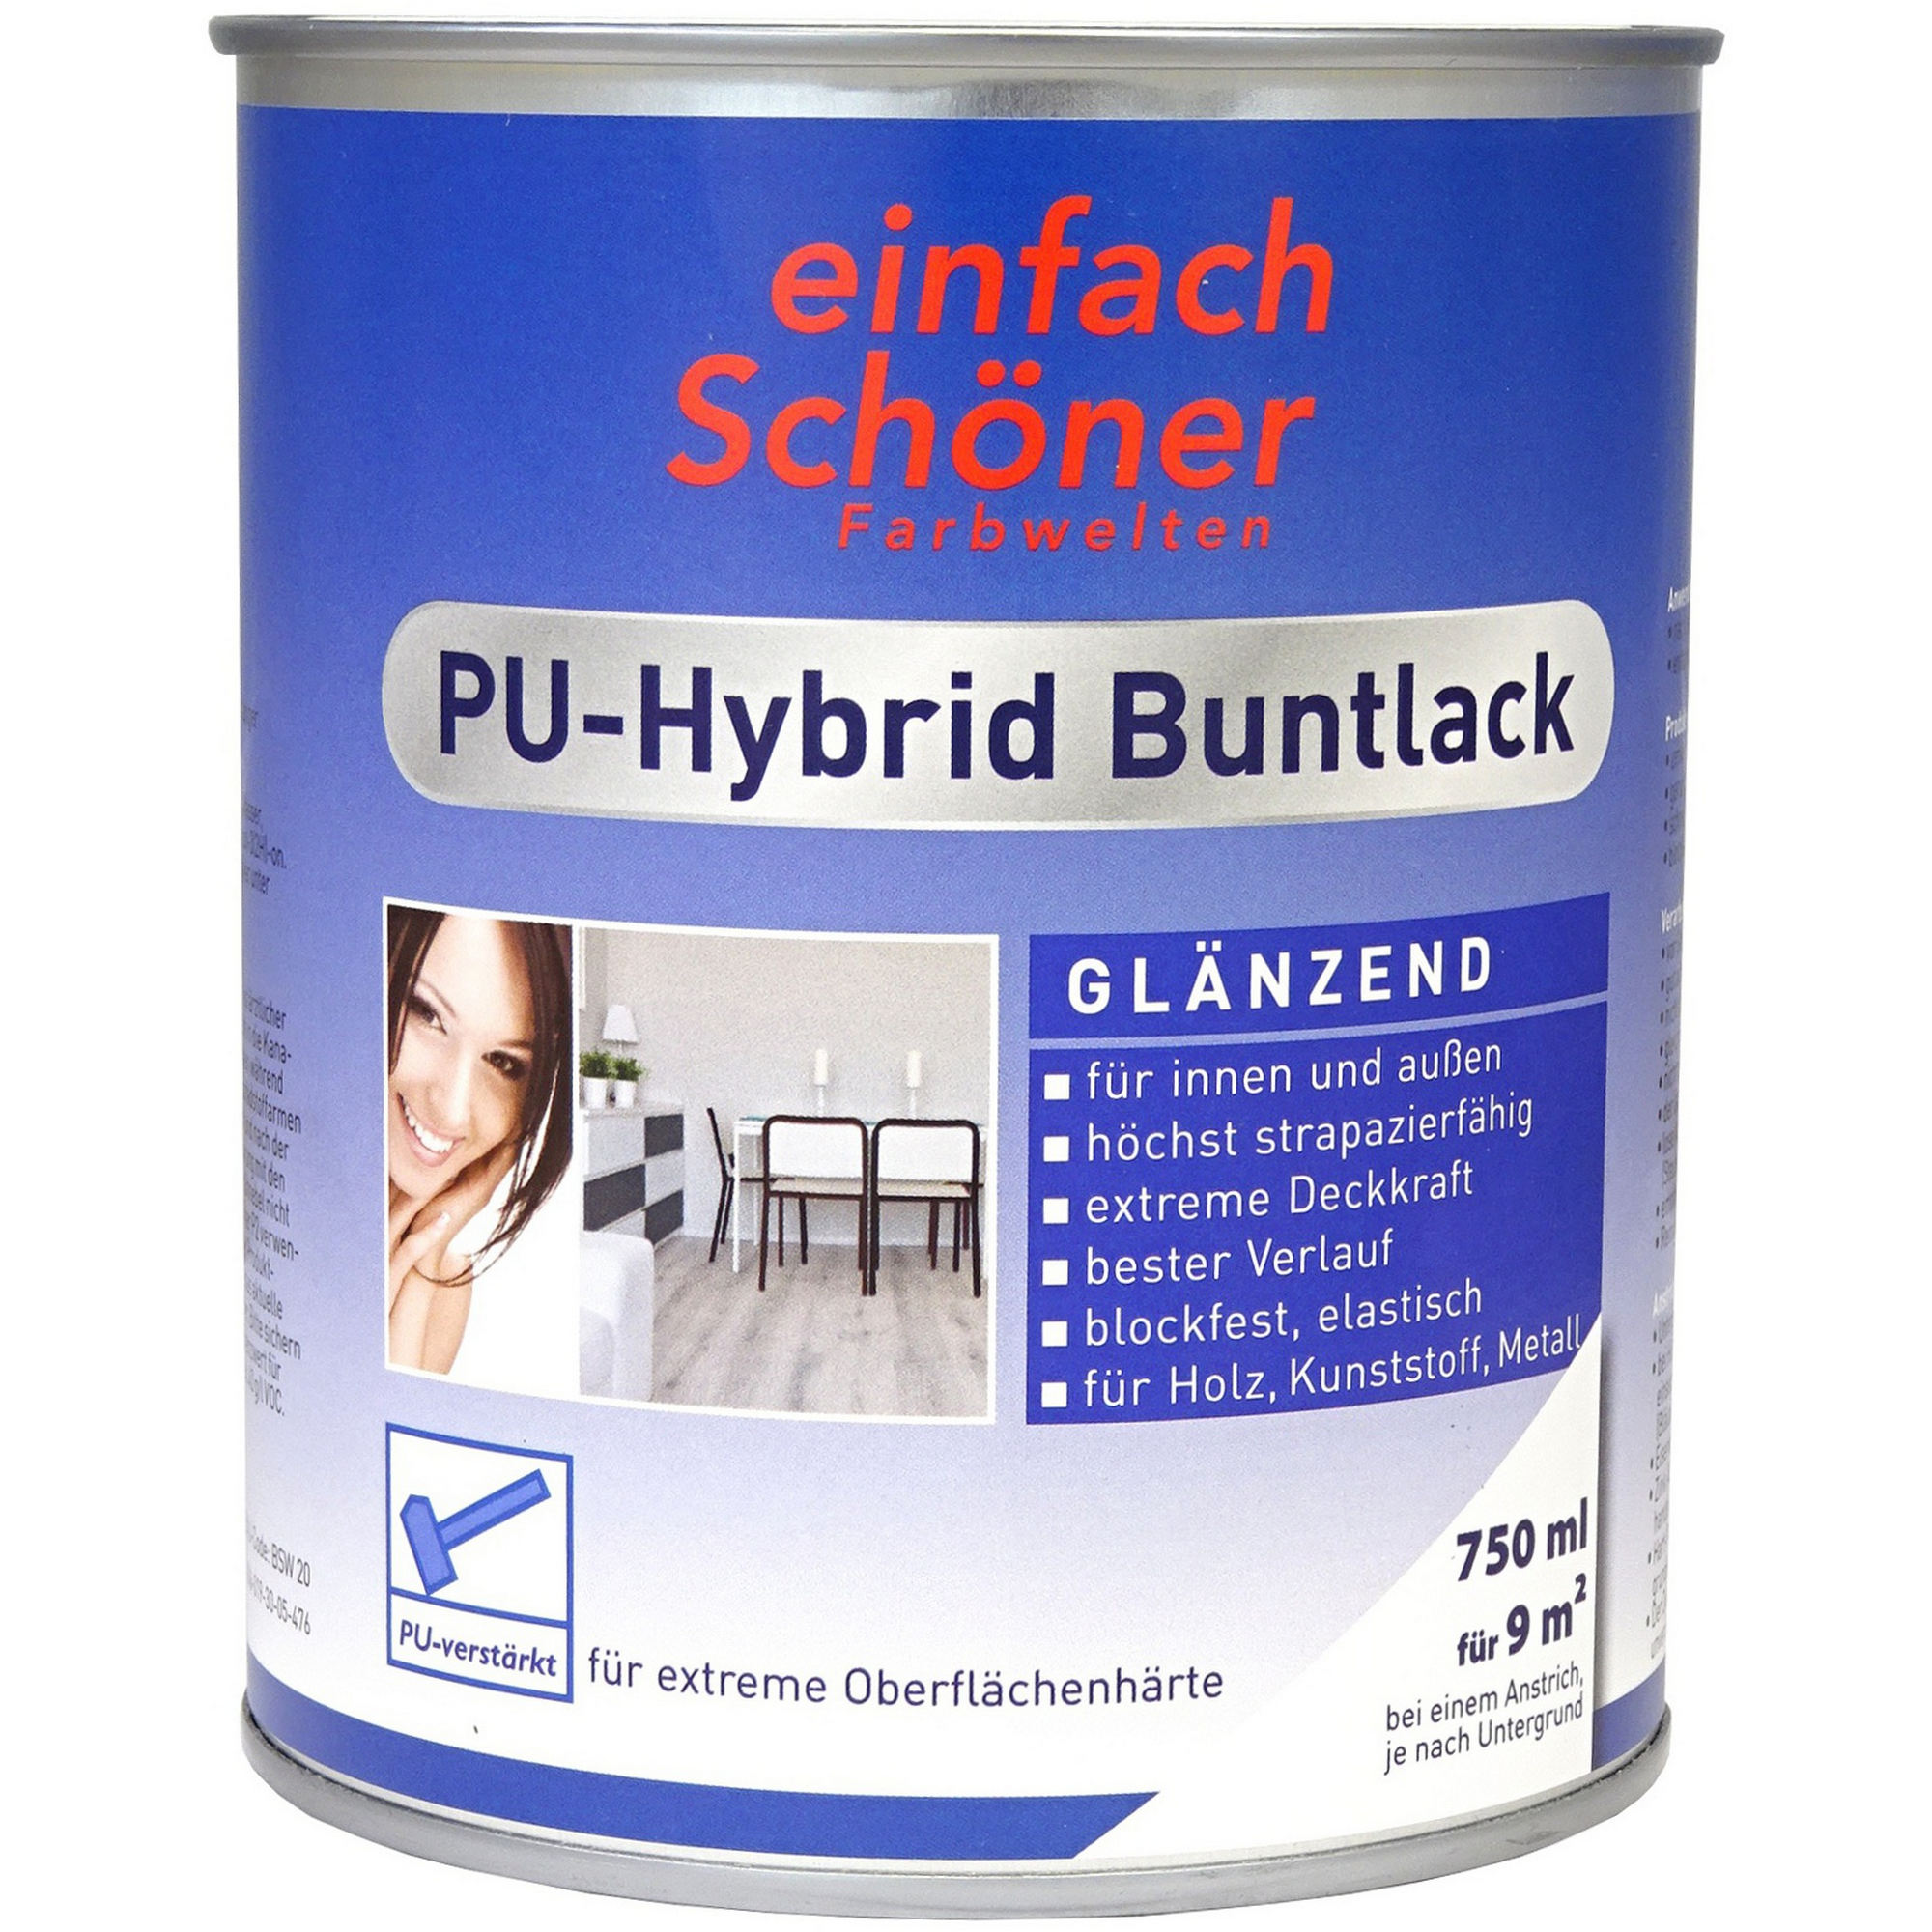 PU-Hybrid Buntlack reinweiß glänzend 750 ml + product picture